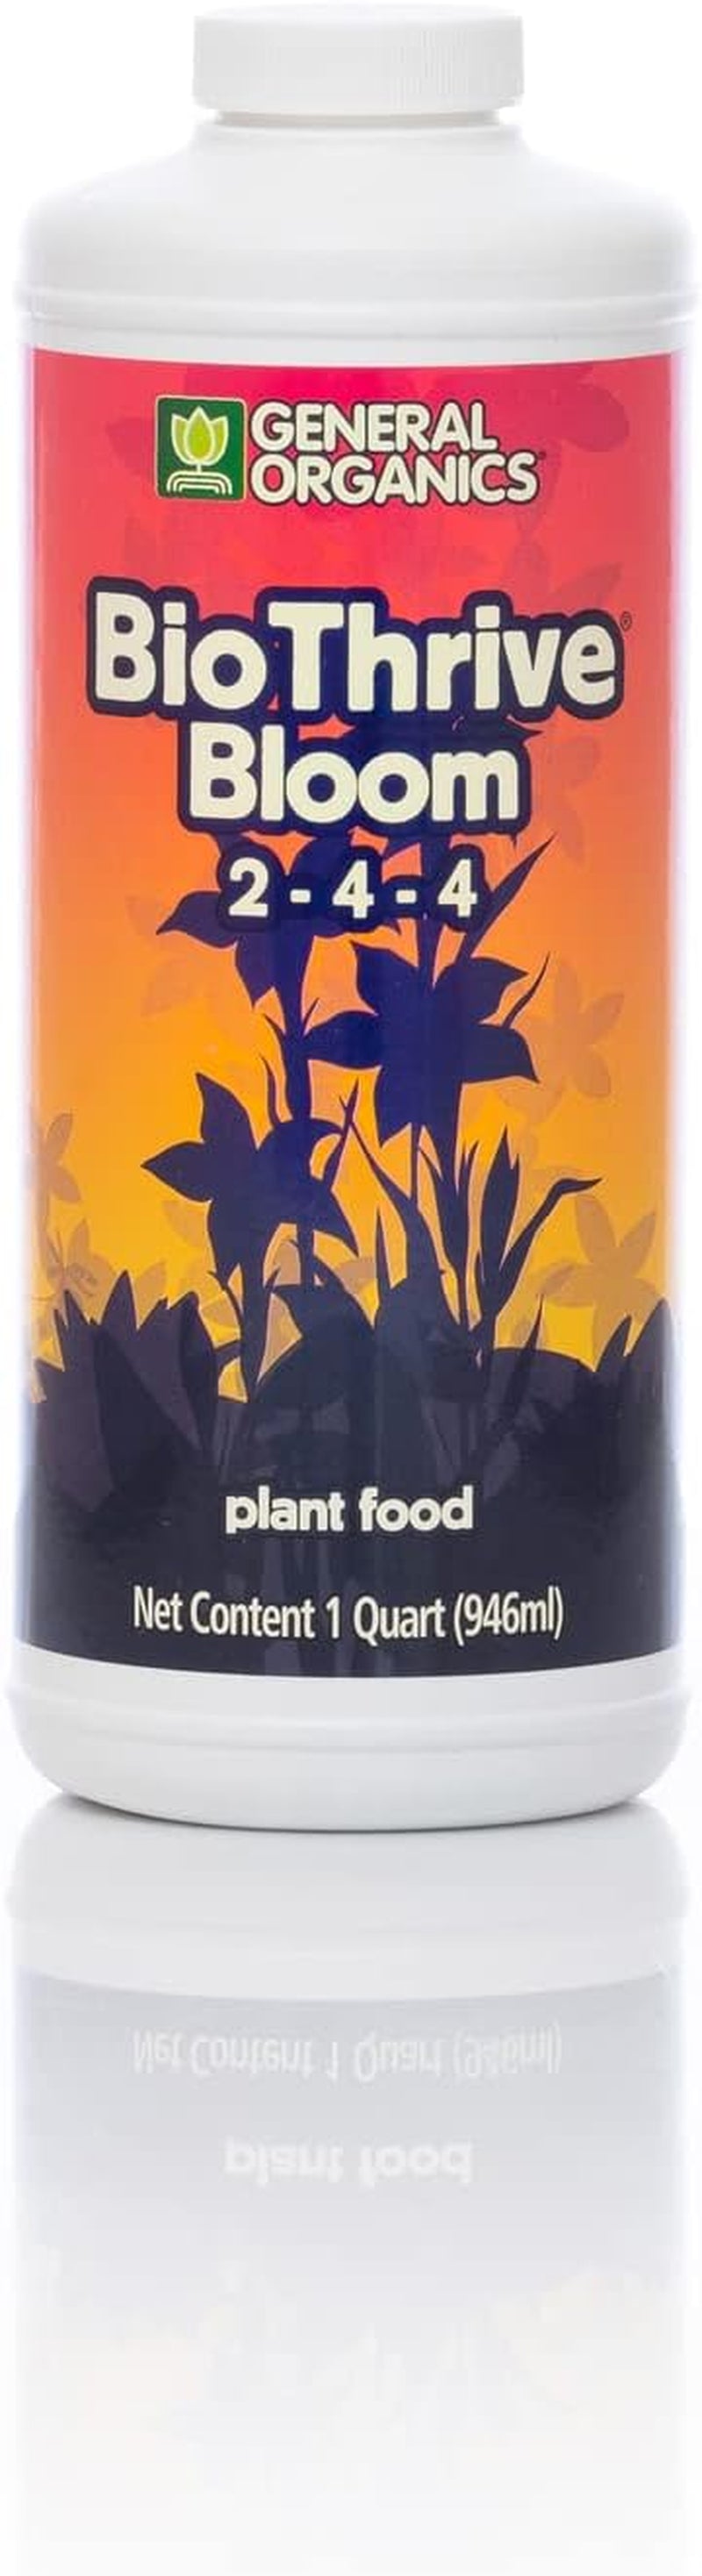 General Organics Biothrive Bloom, Quart